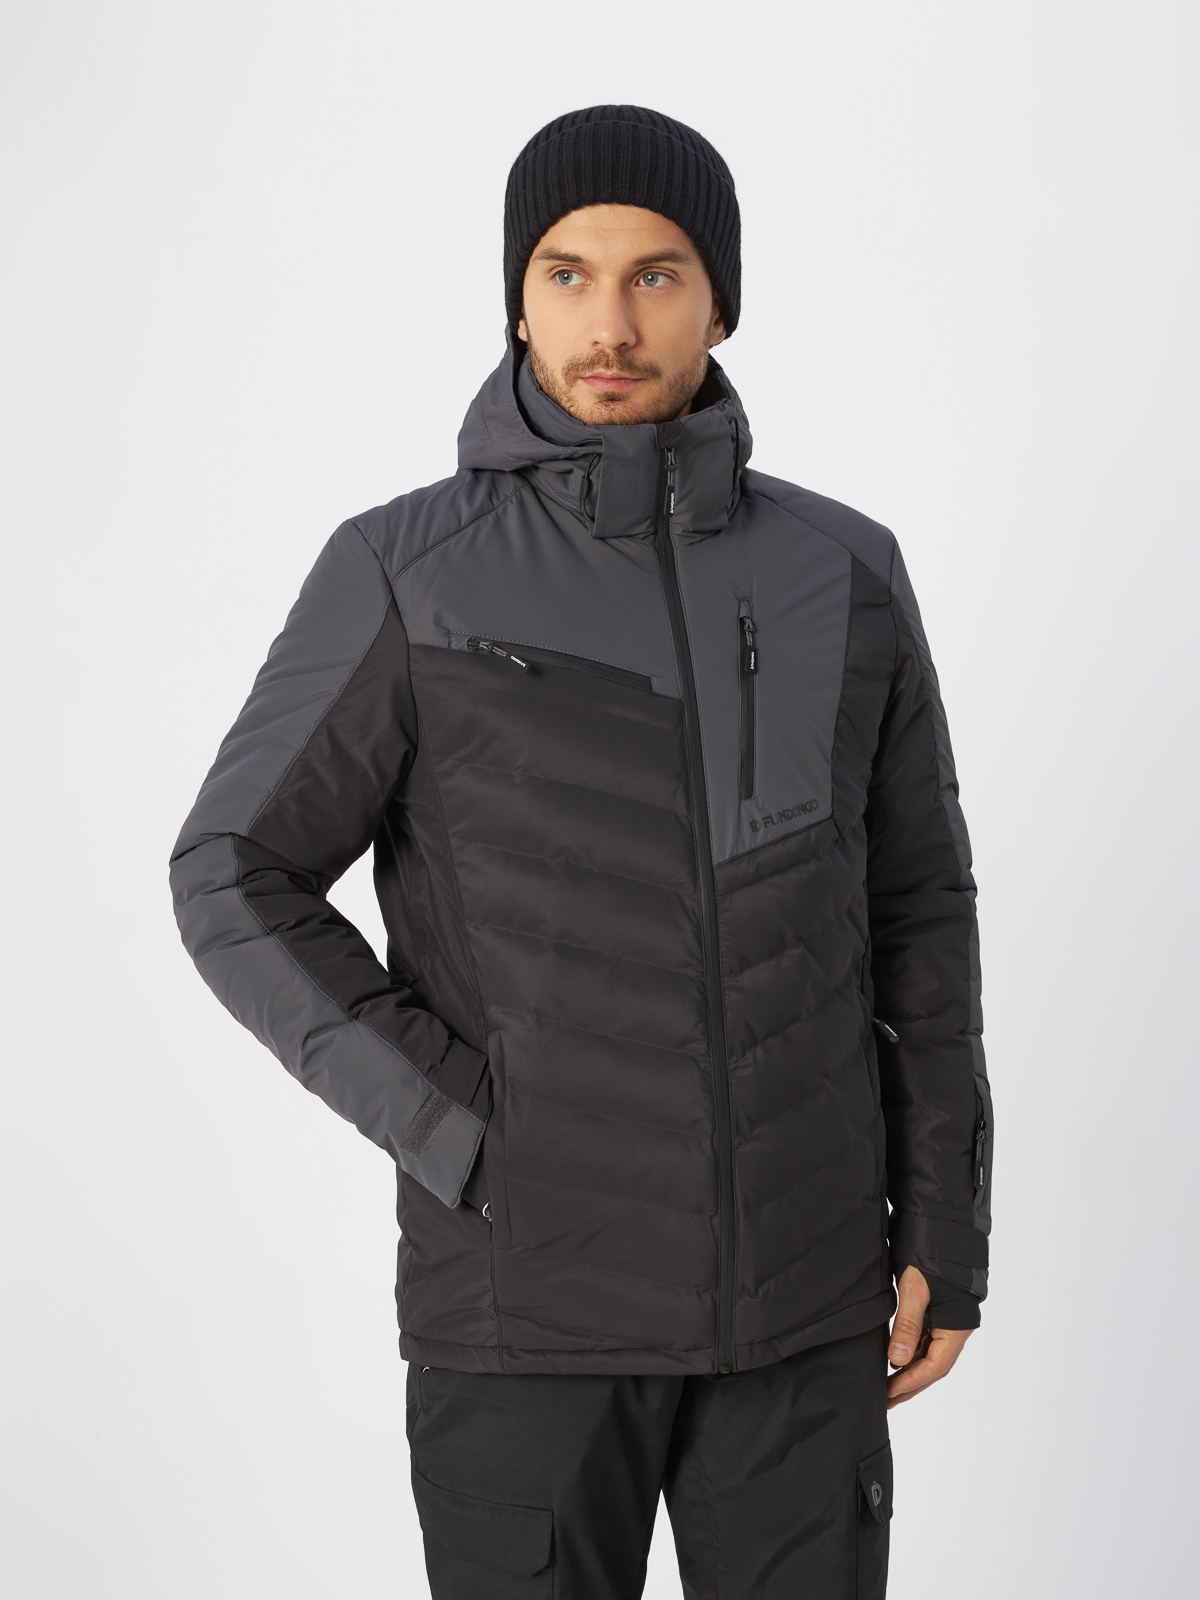 Куртка Fundango для мужчин, размер S, 1QB106, чёрно-серая